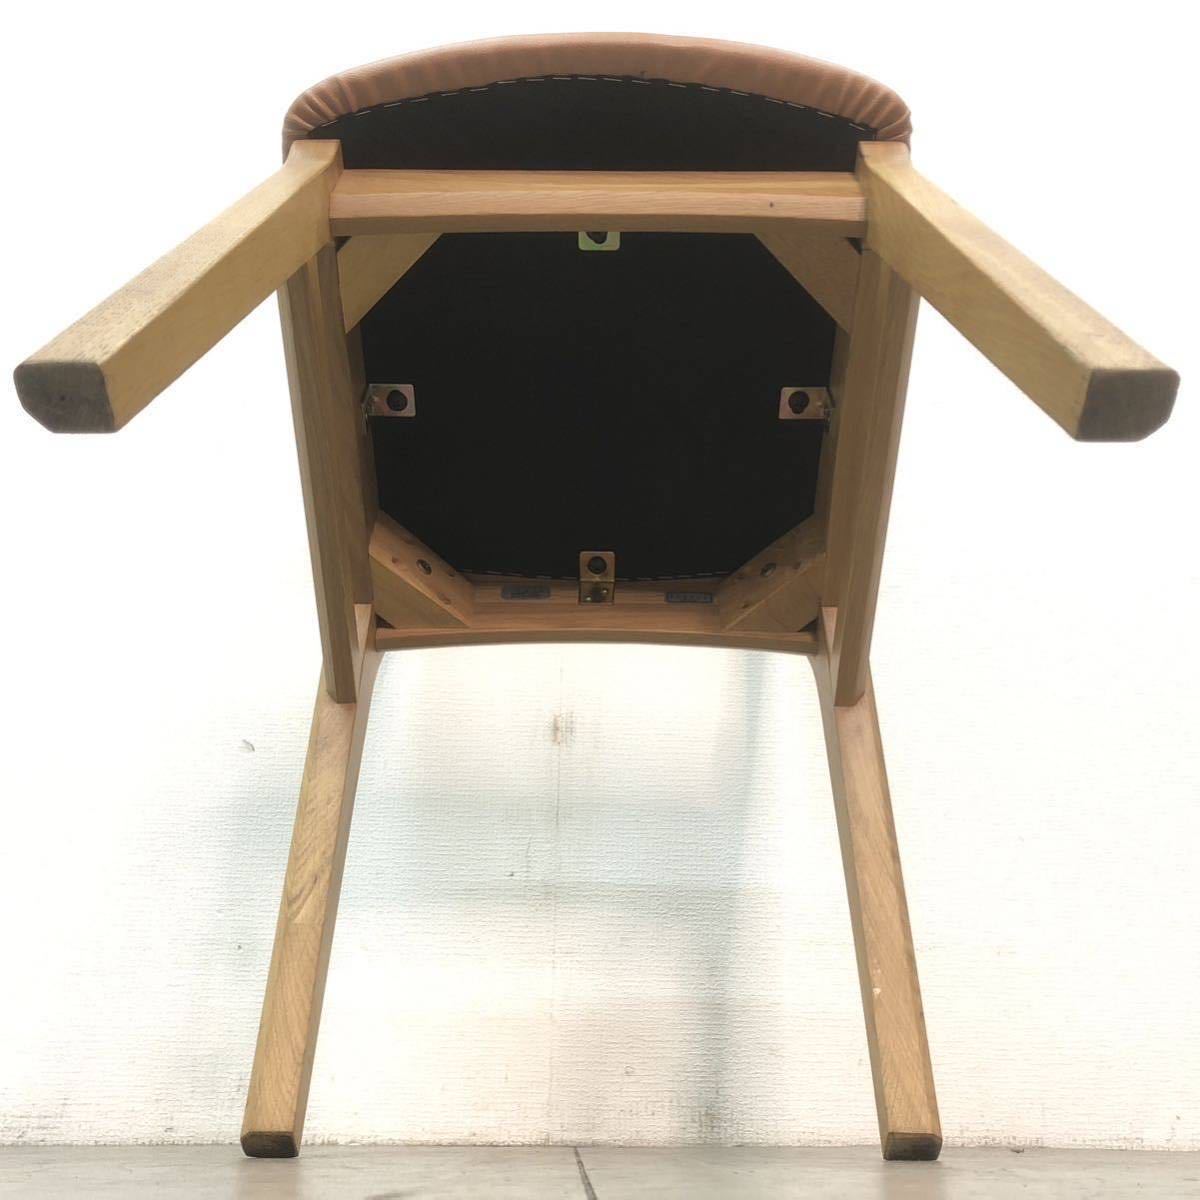 □KAWAJUN カワジュン ダイニングチェア 1脚 木製 フレーム 座面レザー シンプル 椅子 イス いす チェア アームレス ナチュラル □23102808_画像7